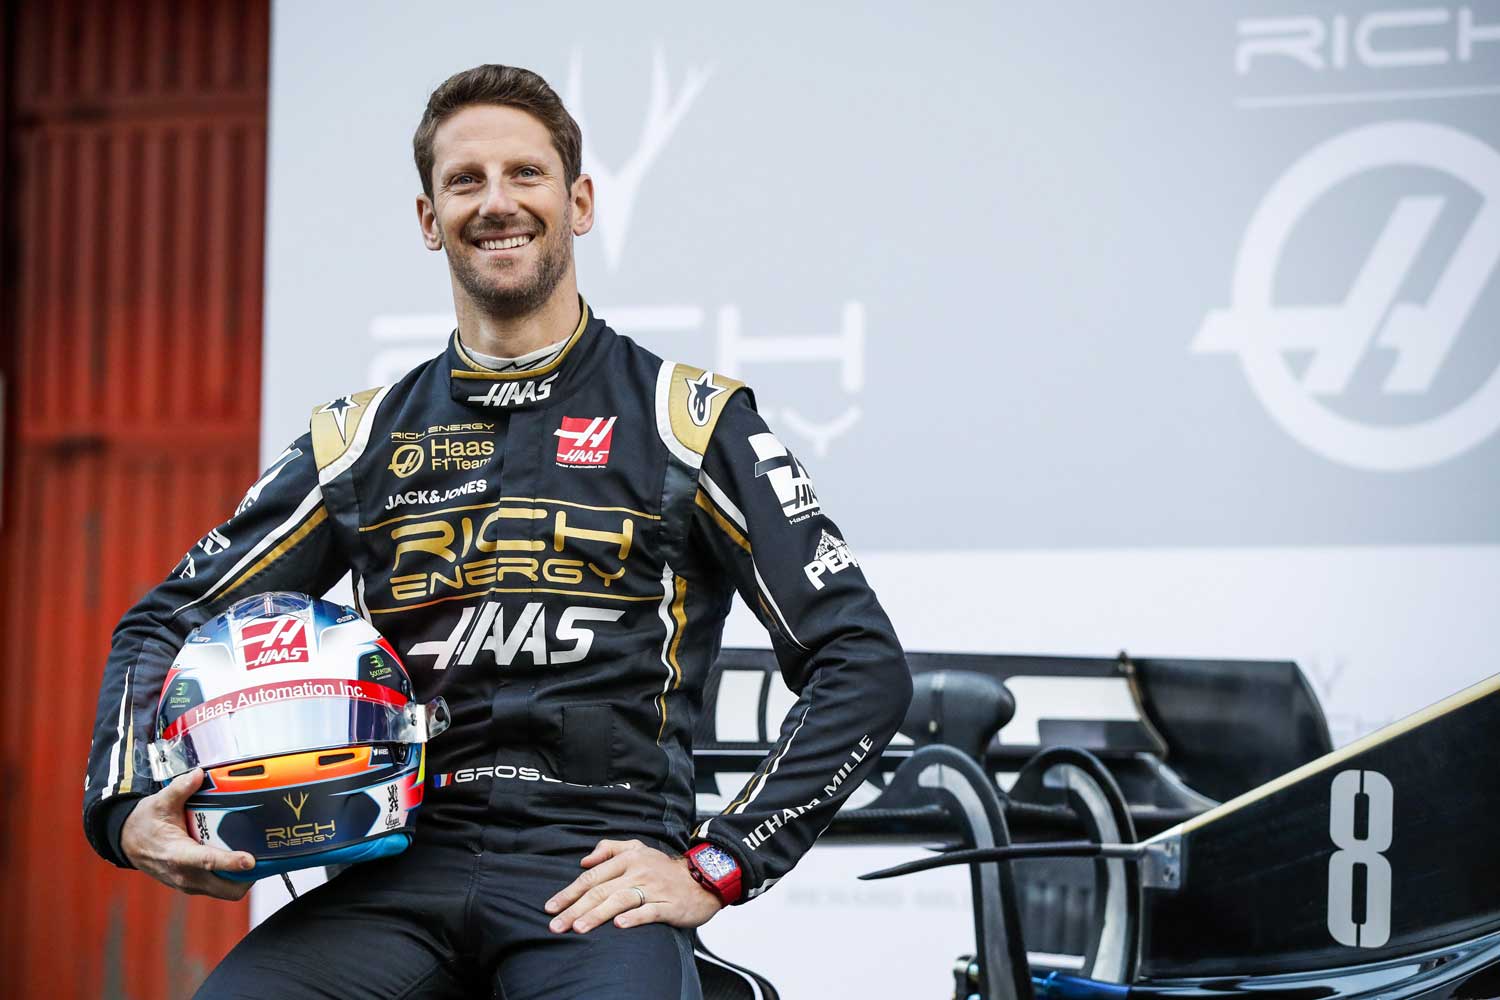 Haas F1 Racing team member Romain Grosjean